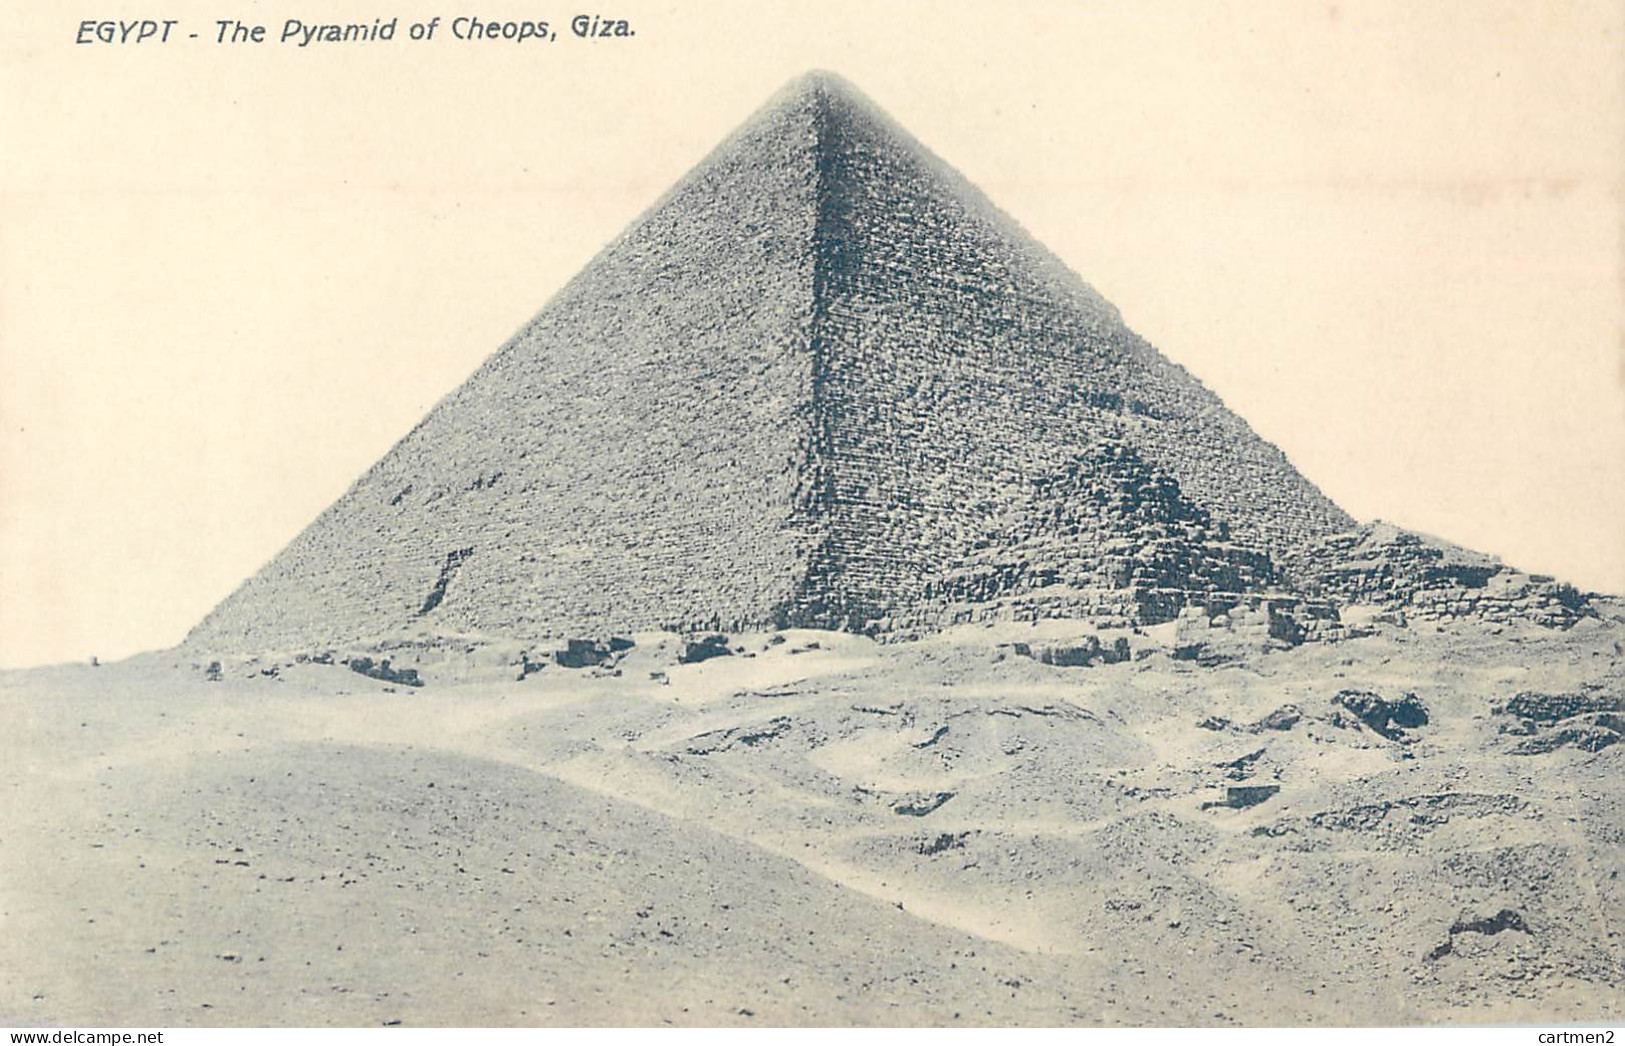 LOT 28 CPA : ALEXANDRIA SAQQARA EDFU PYRAMIDS GIZA SPHINX HELIOPOLIS THEBES NUBIA ESNEH LUXOR EGYPT EGYPTE EGYPTOLOGY